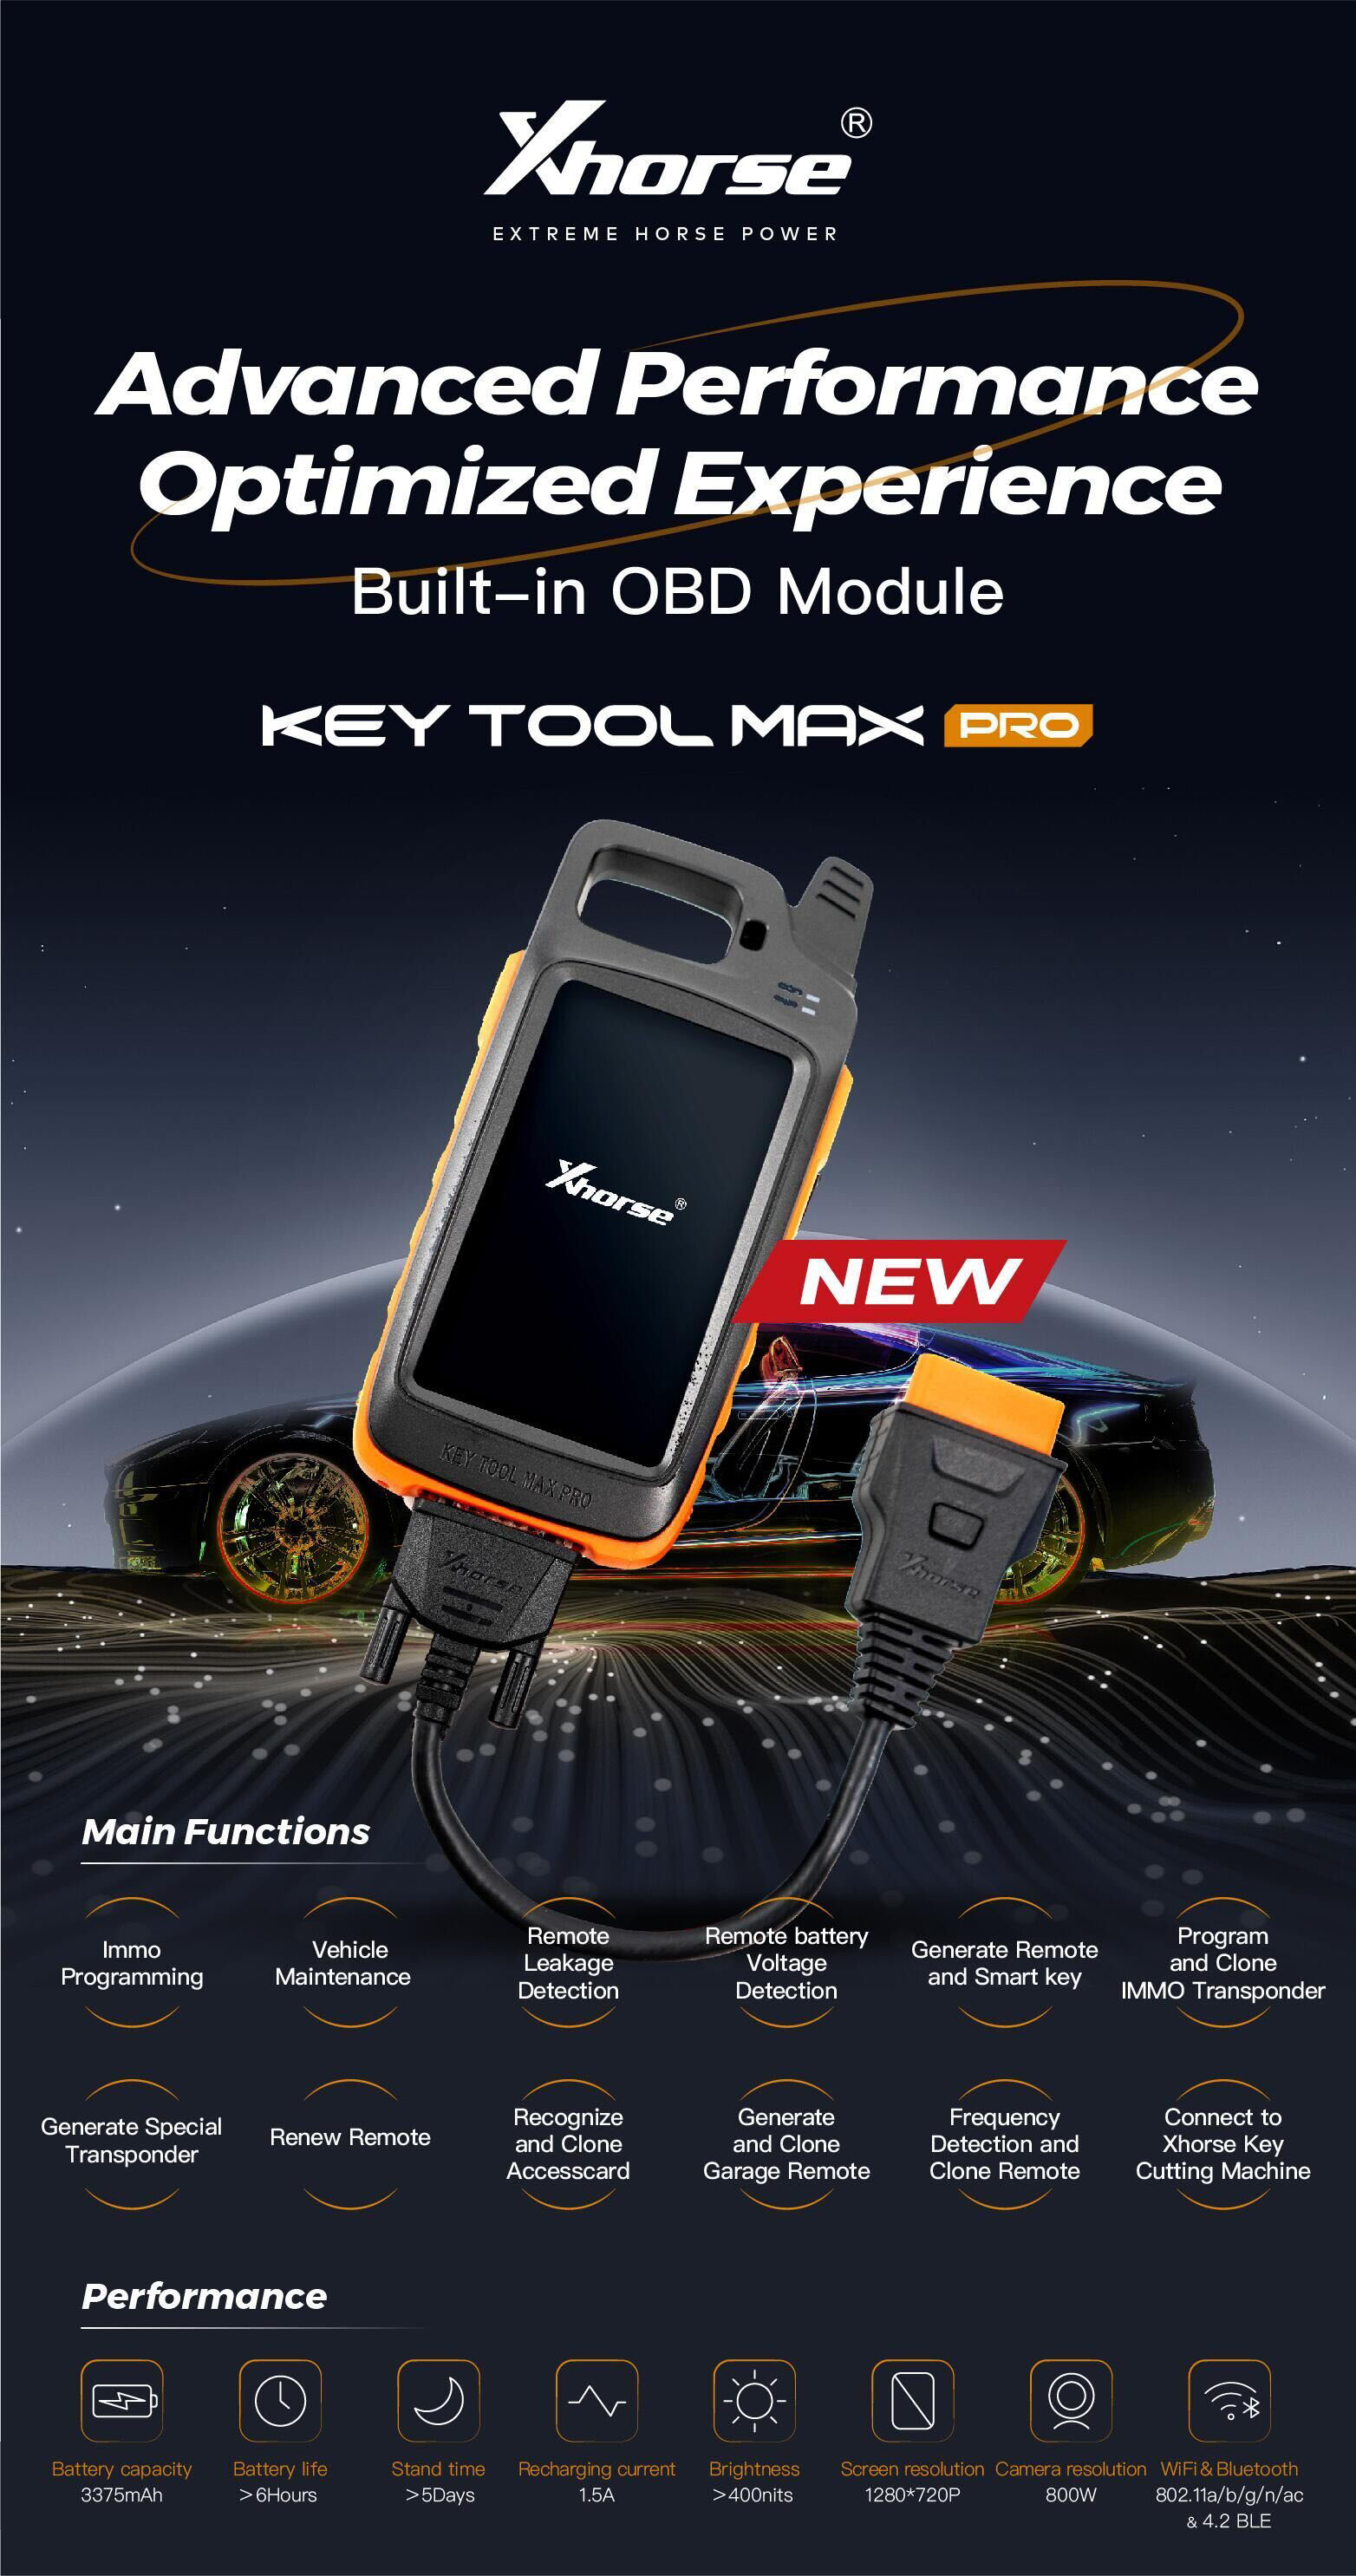 Xhorse VVDI Key Tool Max Pro